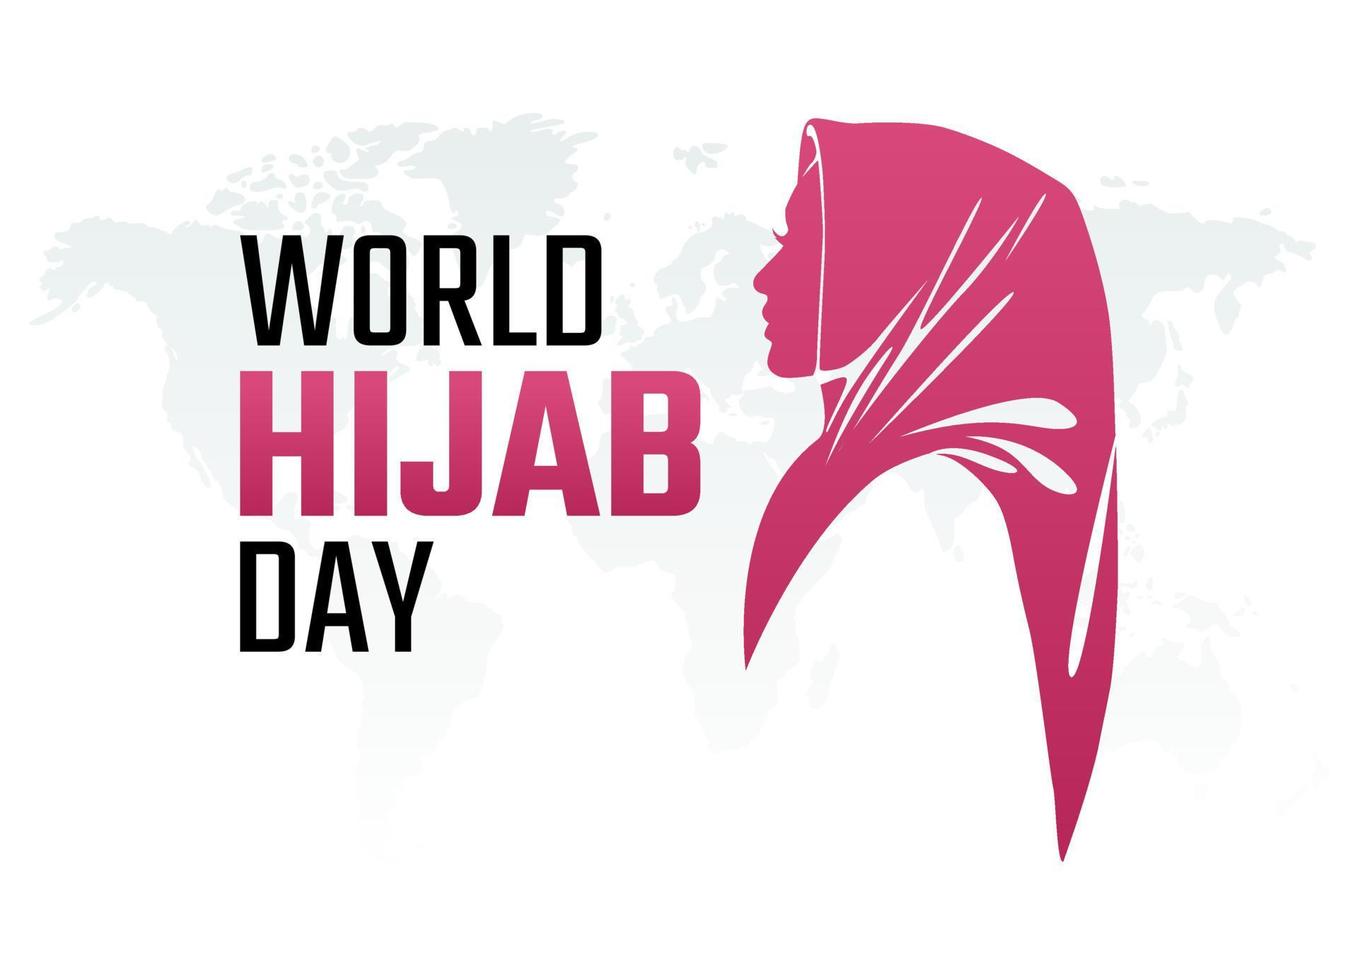 World Hijab Day